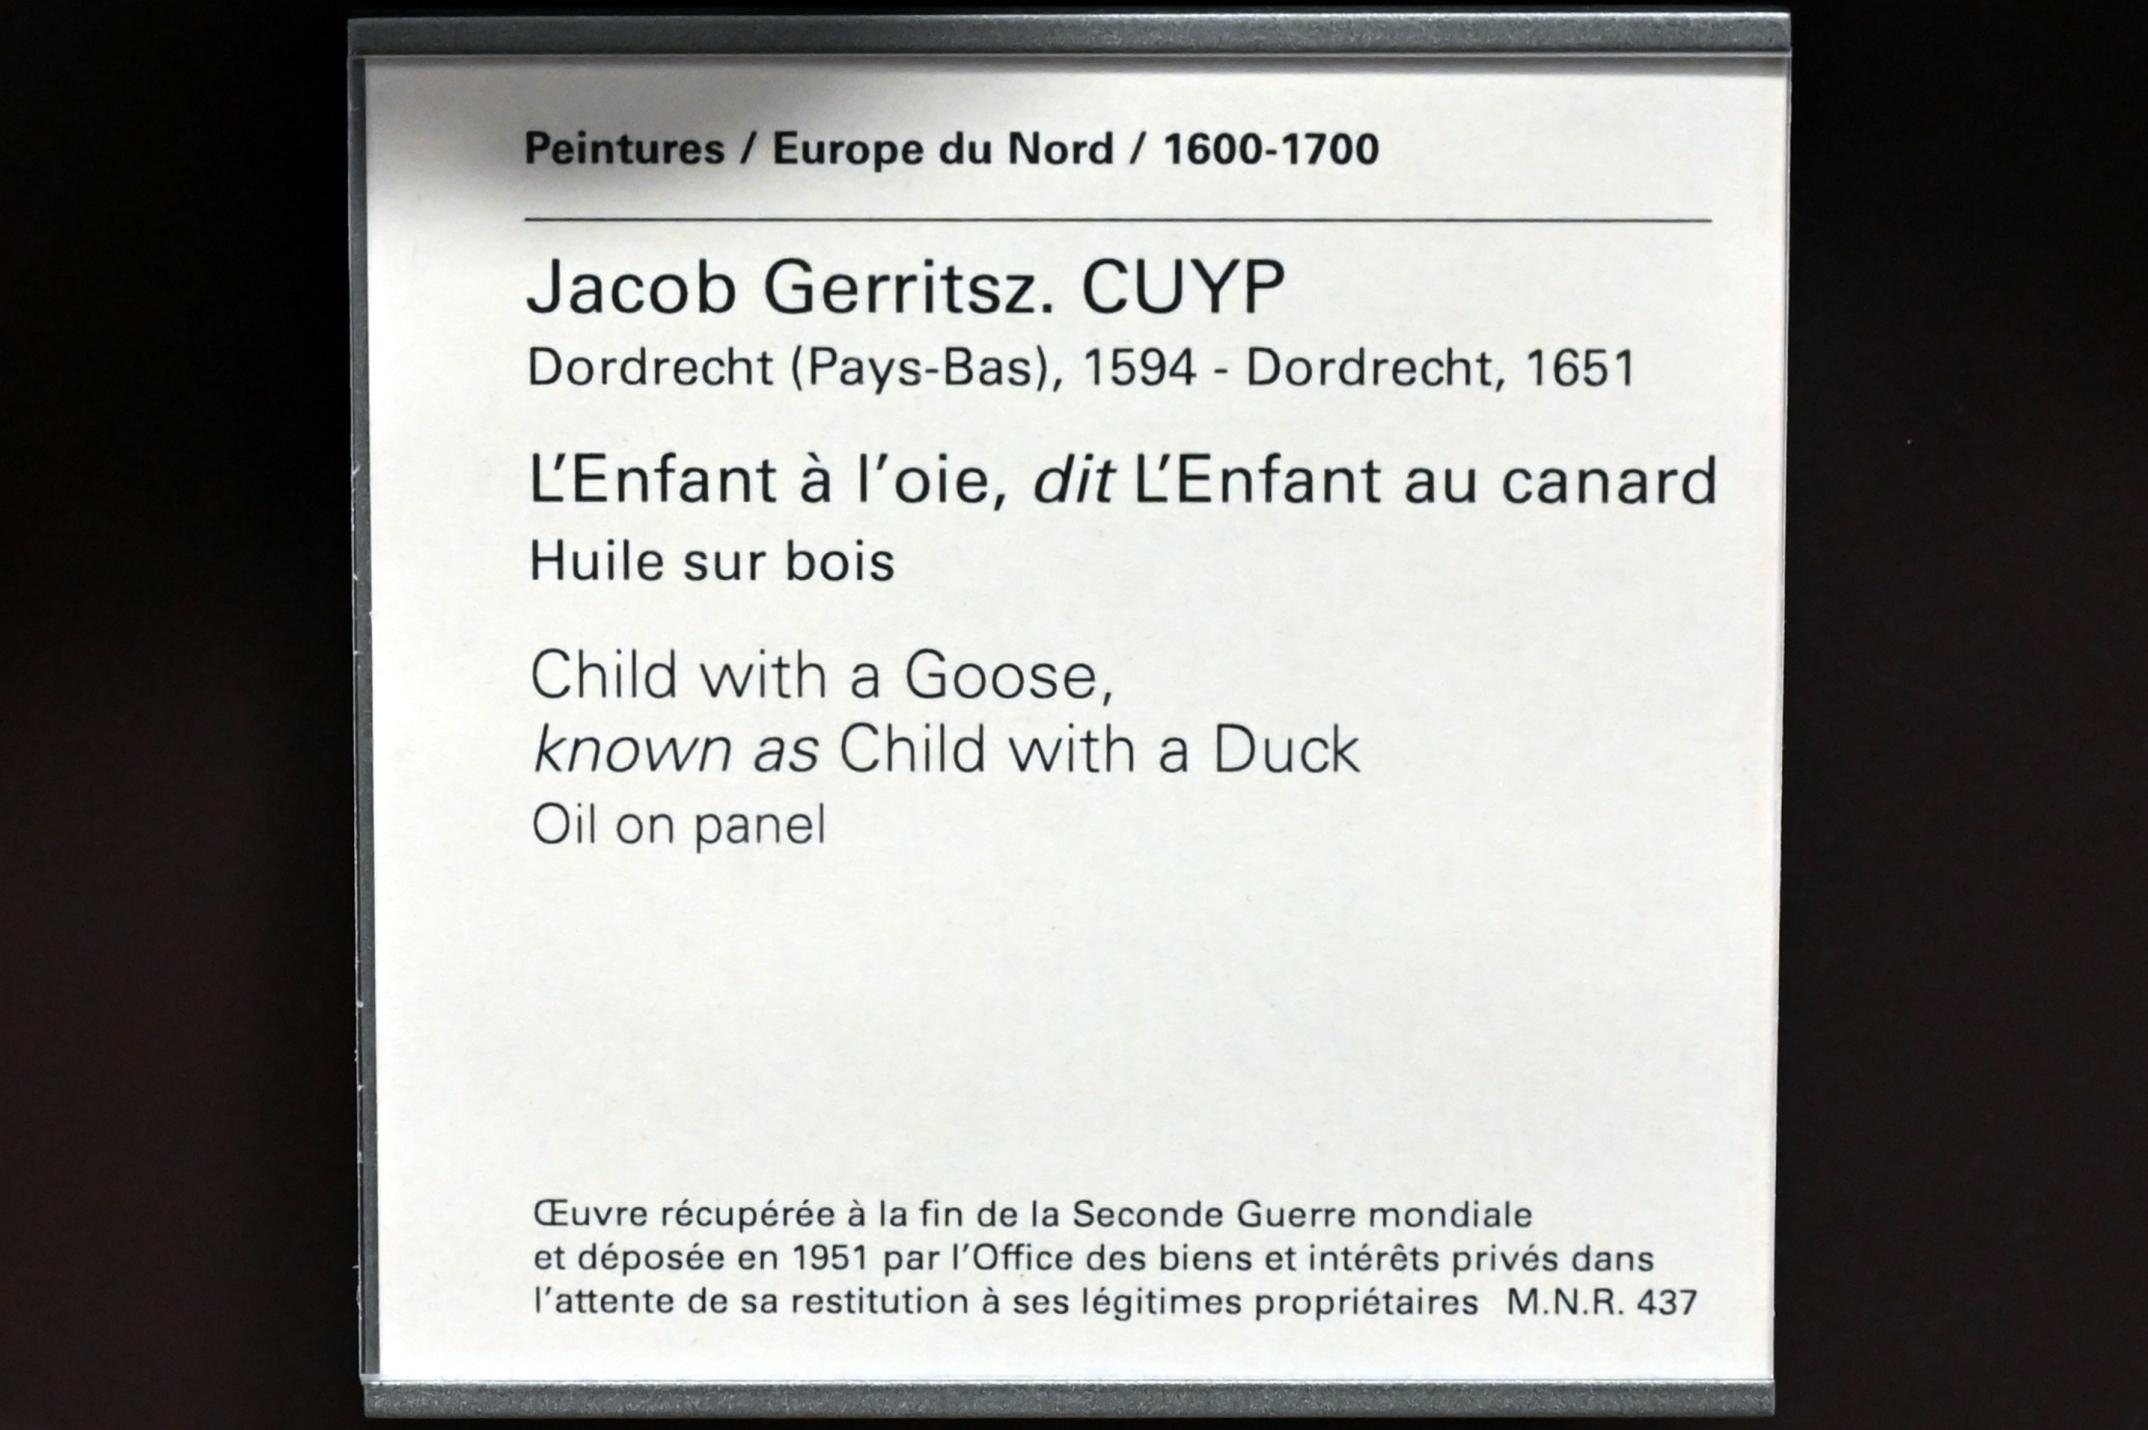 Jacob Gerritsz. Cuyp (1638), Junge mit einer Gans, Paris, Musée du Louvre, Saal 841, Undatiert, Bild 2/2